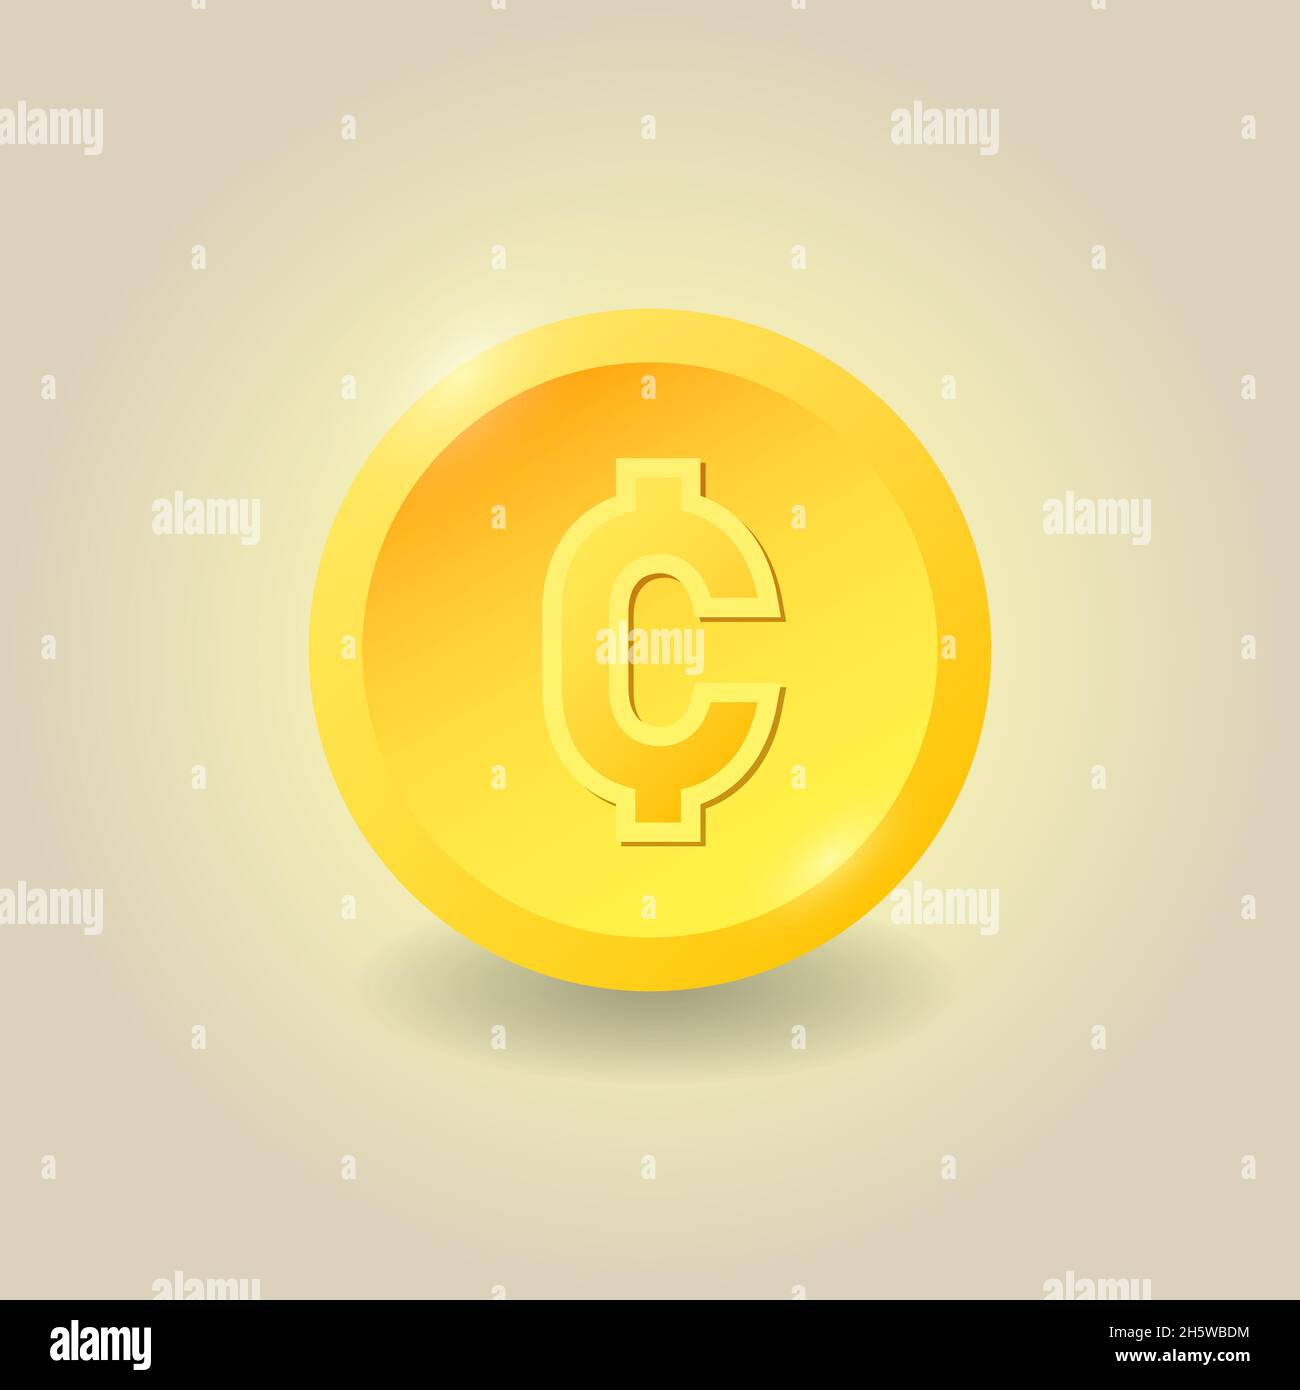 Ghanaian cedi coin. Ghana monetary currency symbol. Cryptocurrency. Vector illustration. Stock Vector